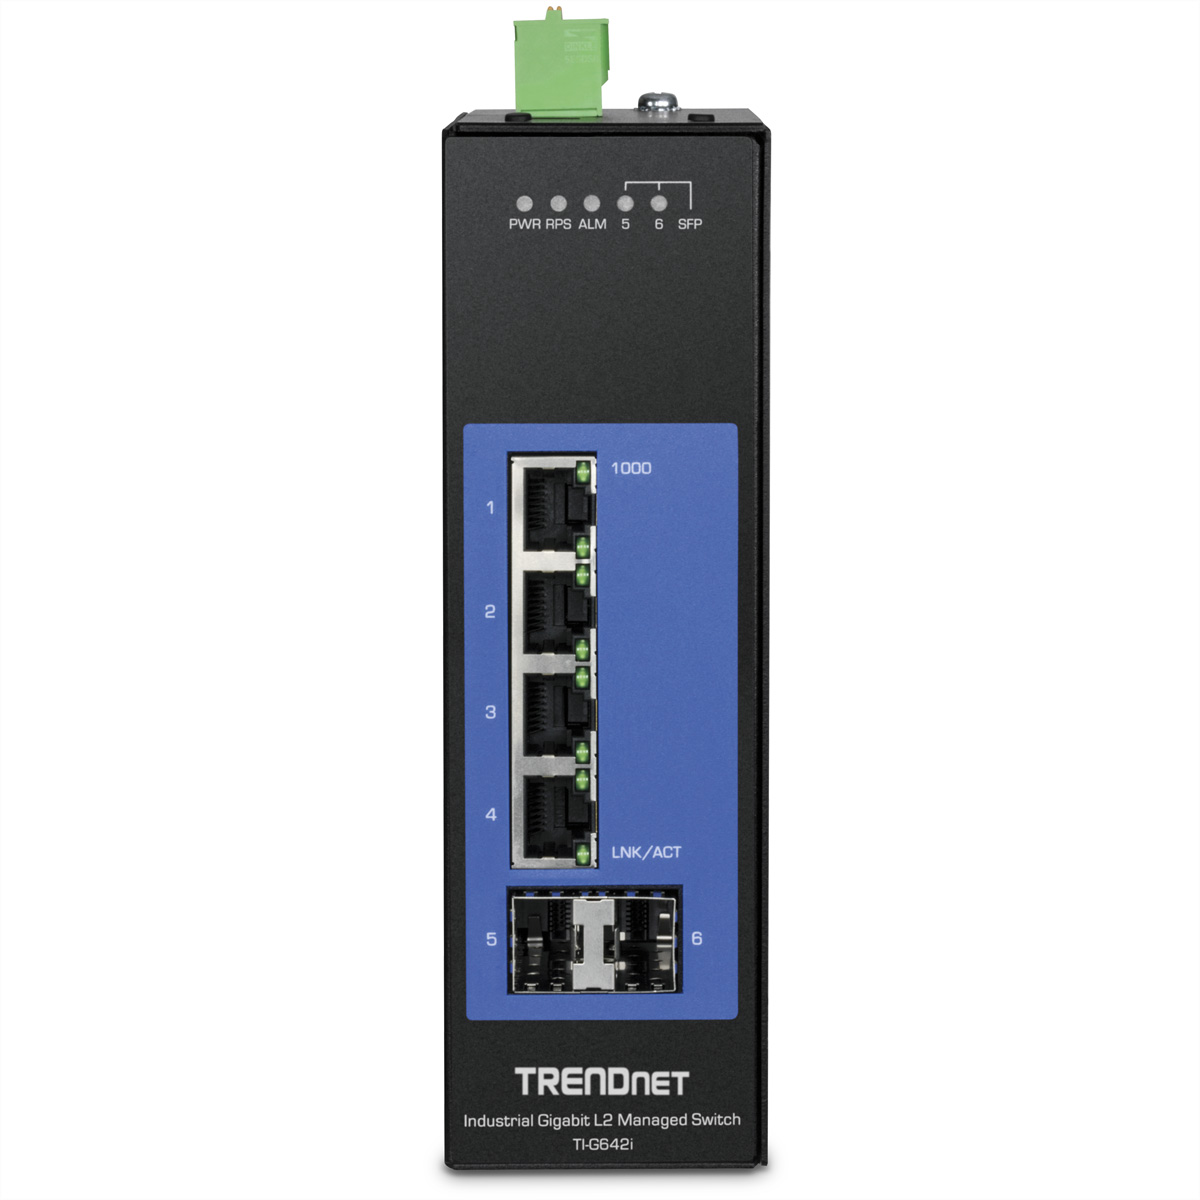 DIN-Rail Ethernet TI-G642i Switch Industrial 6-Port L2 Switch TRENDNET Gigabit Gigabit